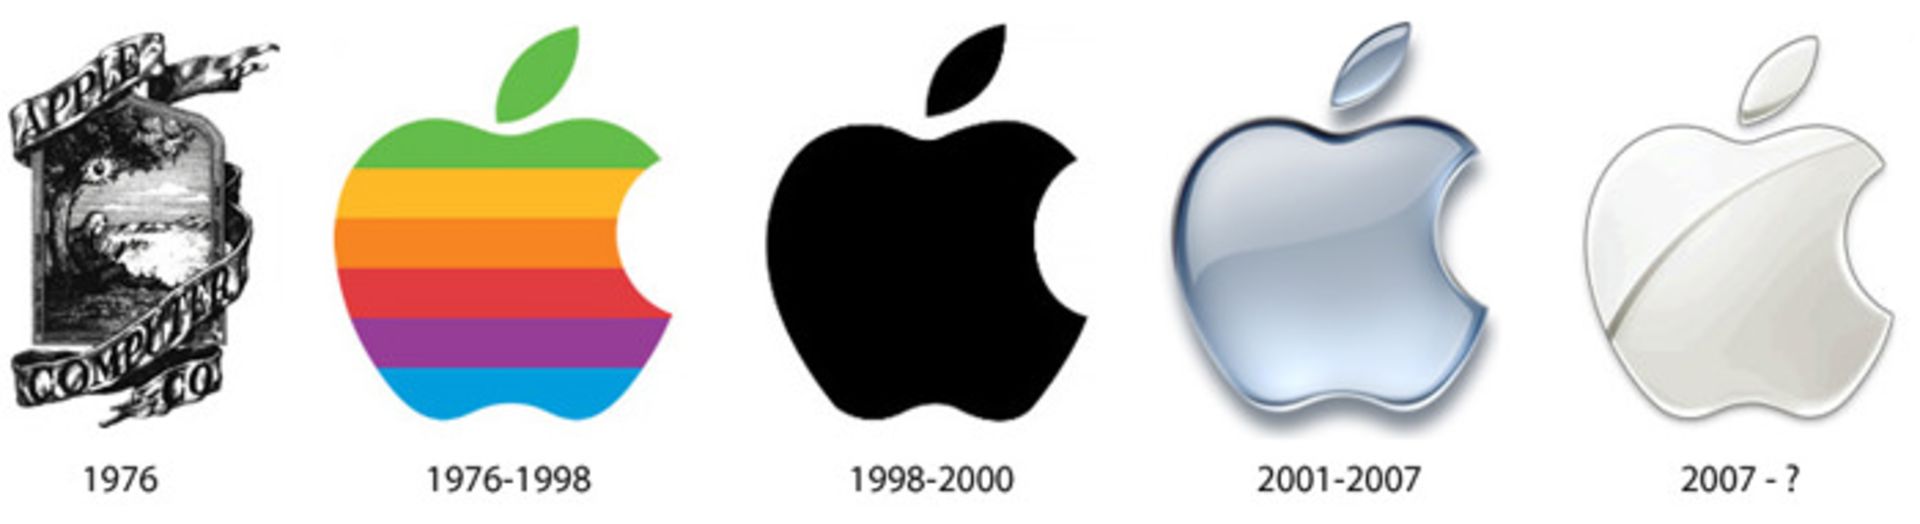 apple logo evolution 1 17b17